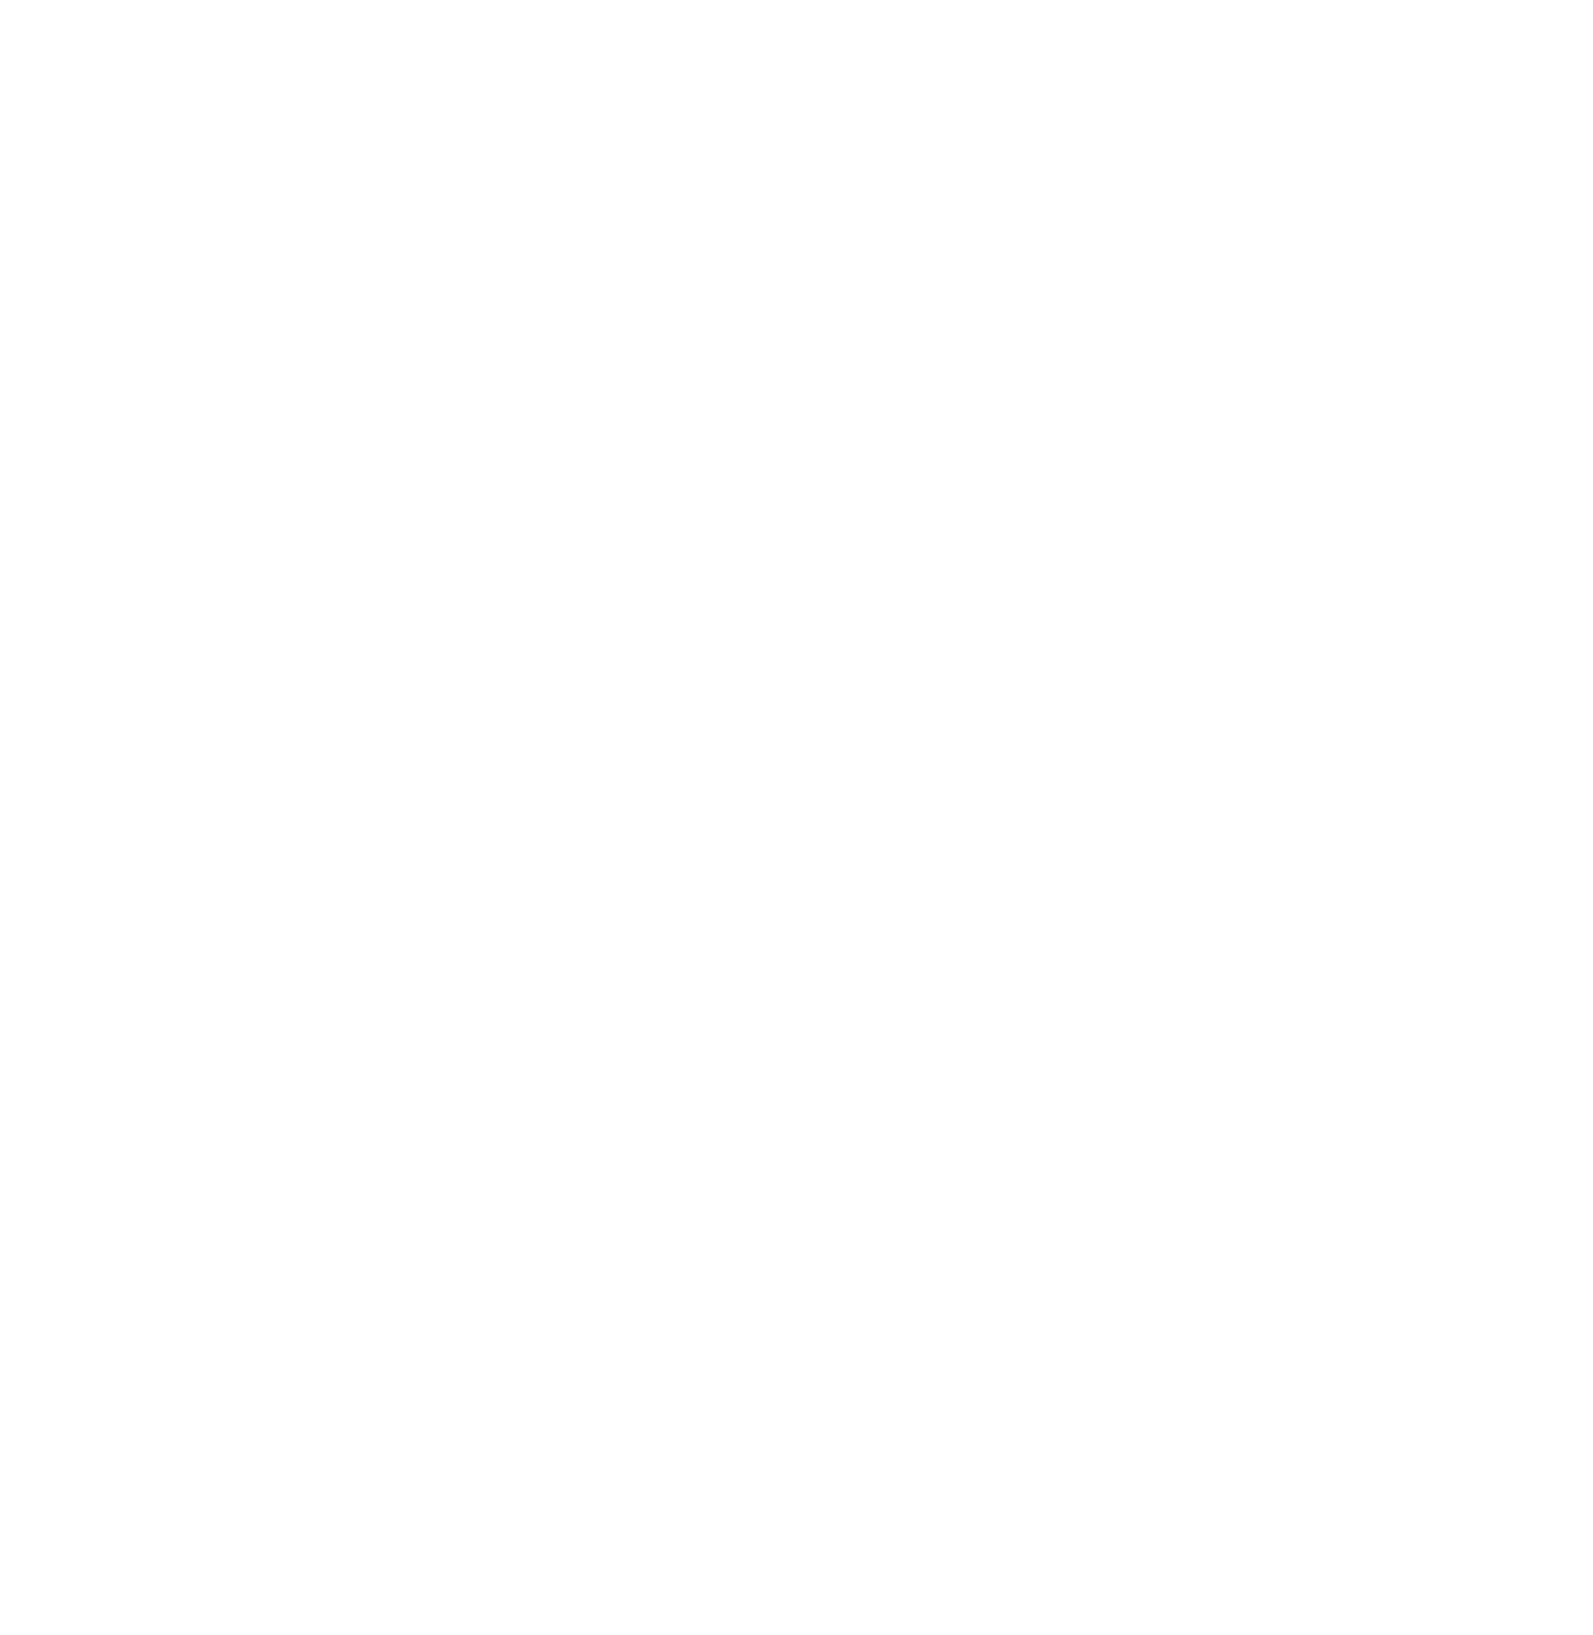 Petronas Petrol Pump: Over 18 Royalty-Free Licensable Stock Vectors &  Vector Art | Shutterstock